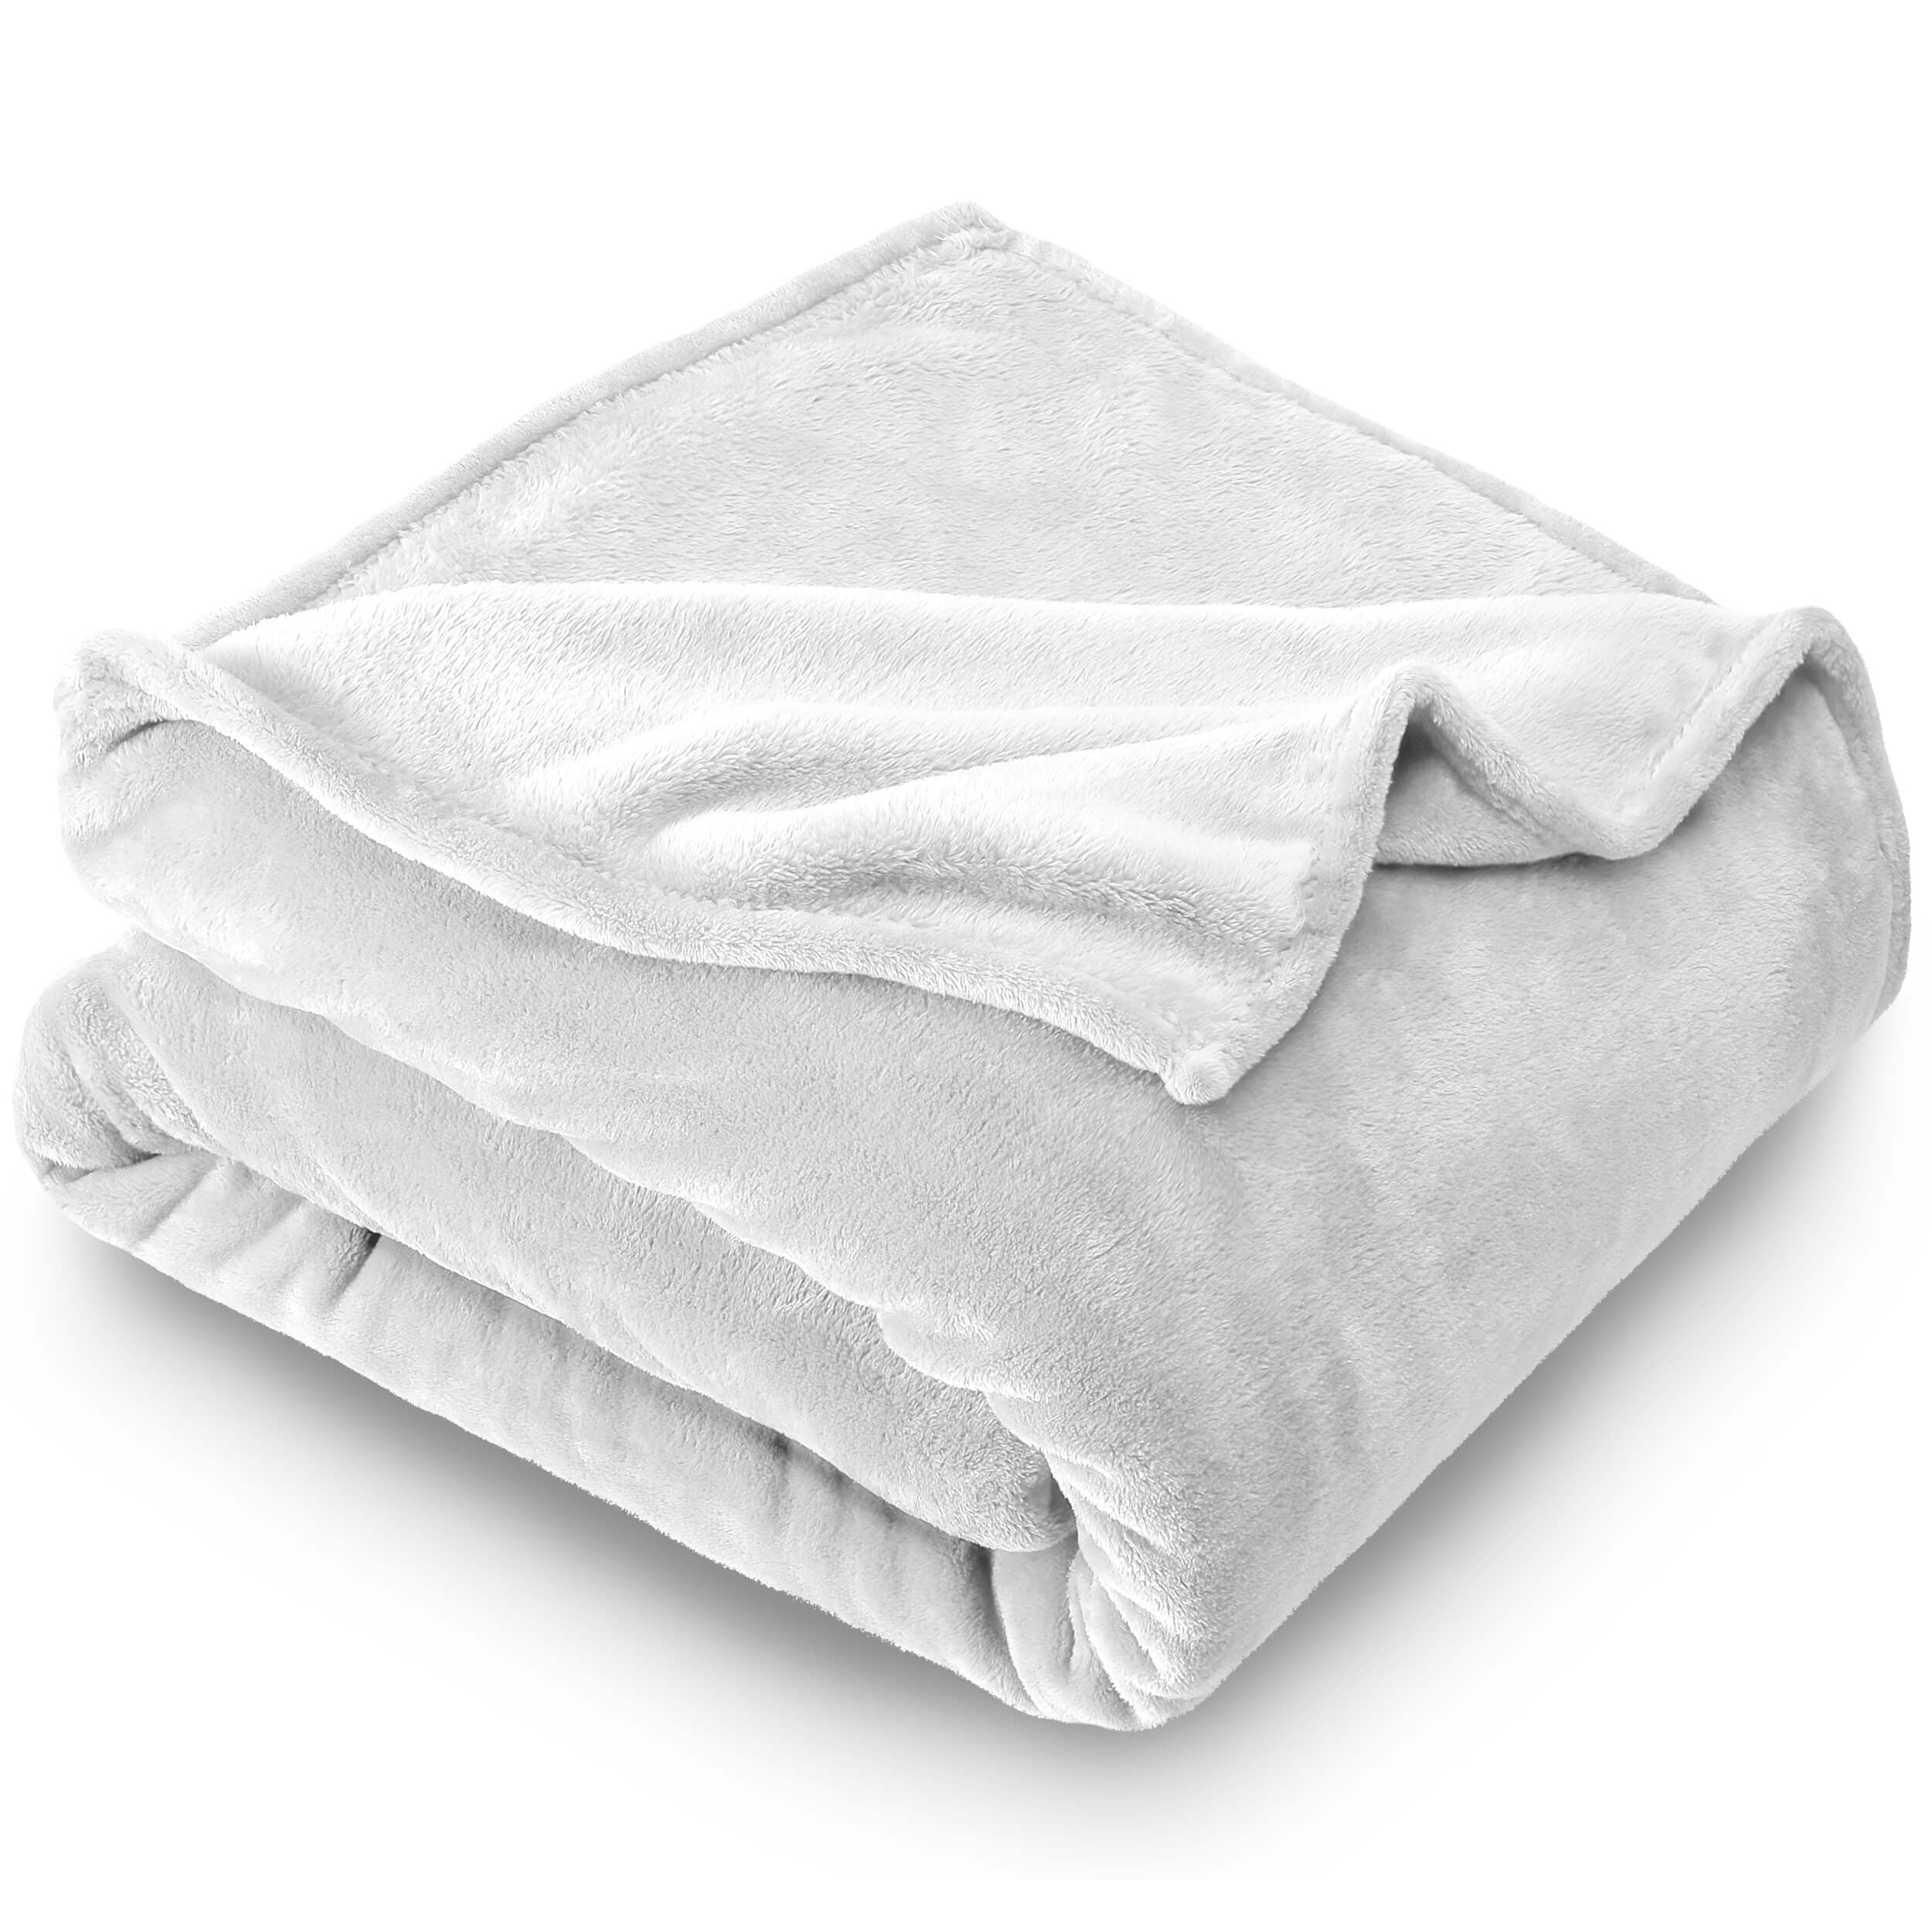 Twin/Twin XL, Light Pink Luxurious Fuzzy Warm Blanket Bare Home Microplush Fleece Blanket Cozy Lightweight Soft Blanket Ultra-Soft Twin/Twin Extra Long Blanket 